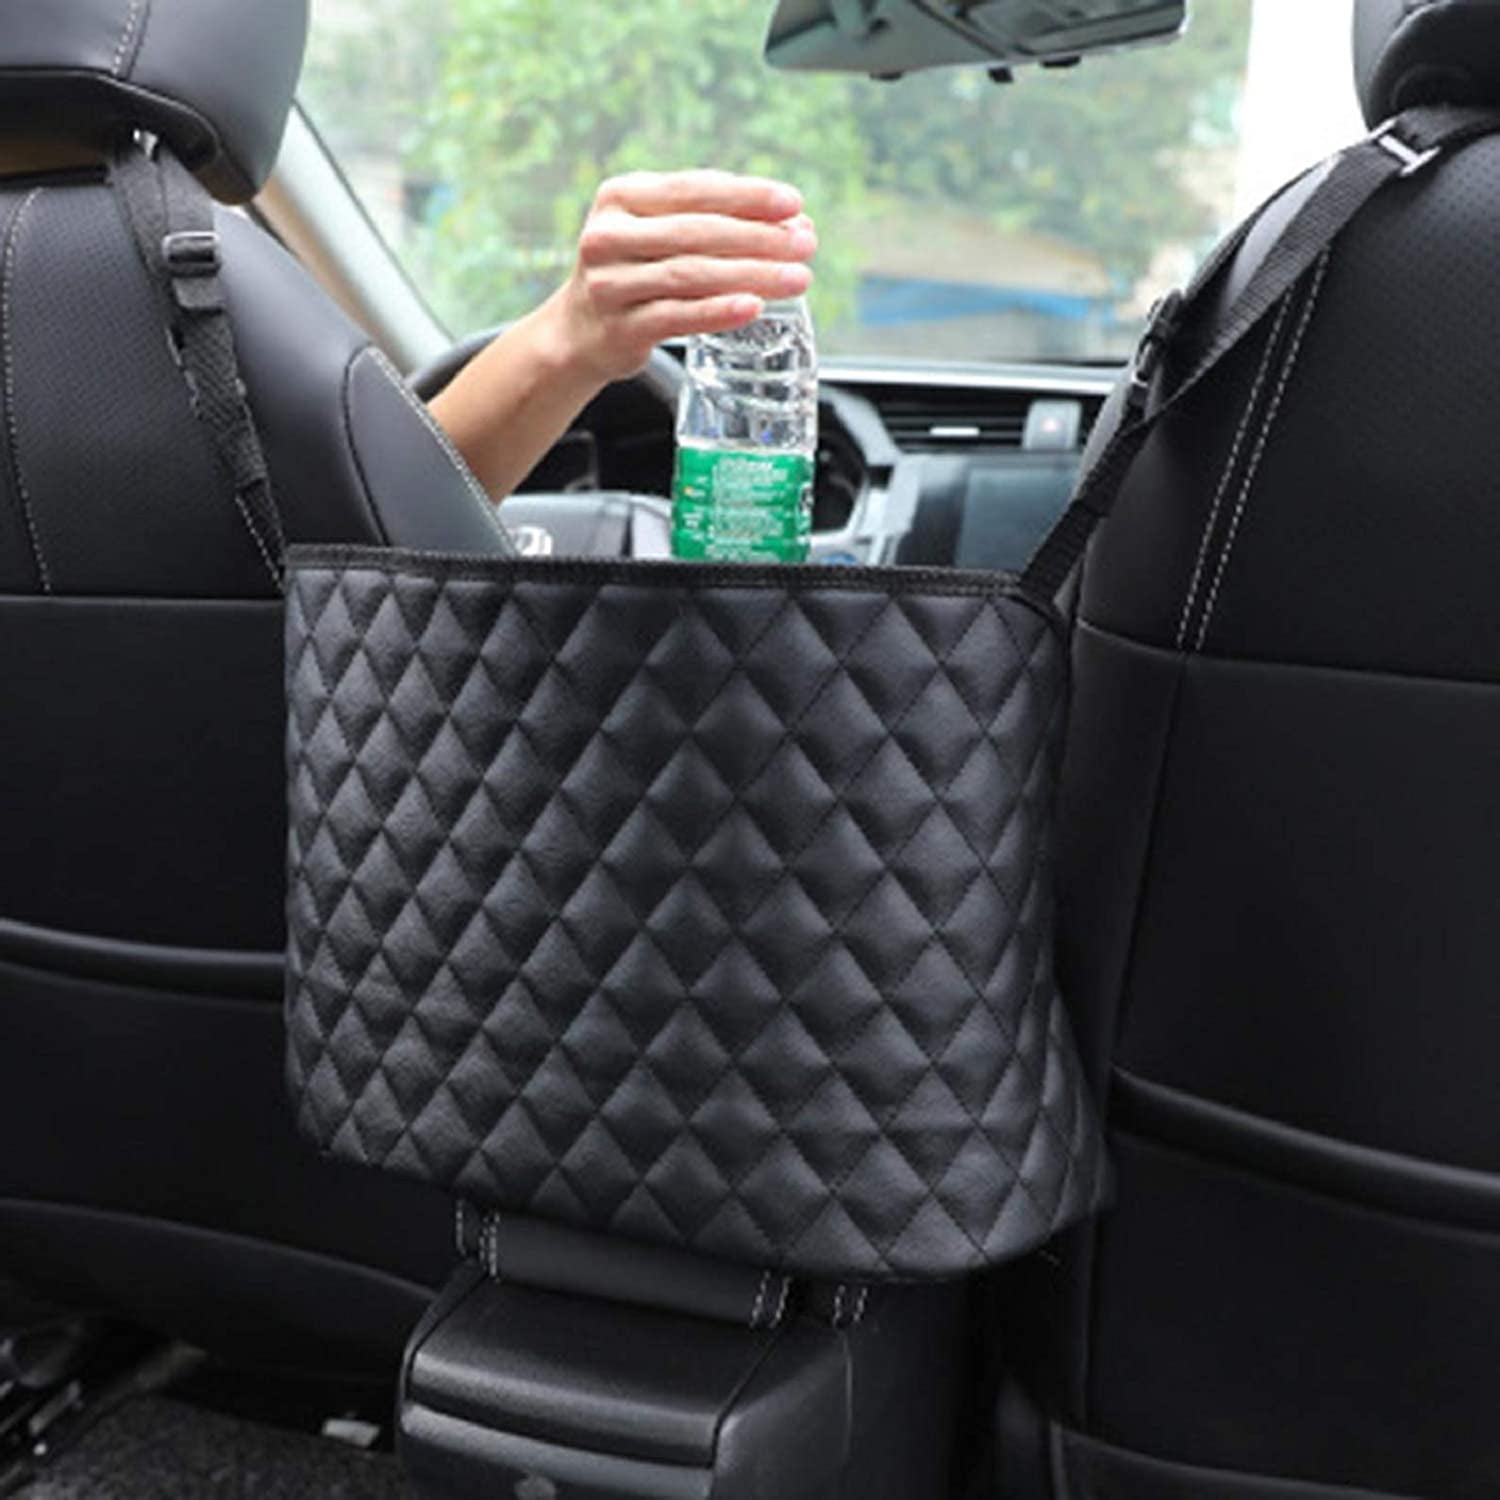 Car Net Pocket Handbag Holder Between Seats Leather-Black Barrier of Backseat Pet Kids Large Capacity Storage Netting Pouch Handbag Holder for Car Purse Seat Back Mesh Organizer 